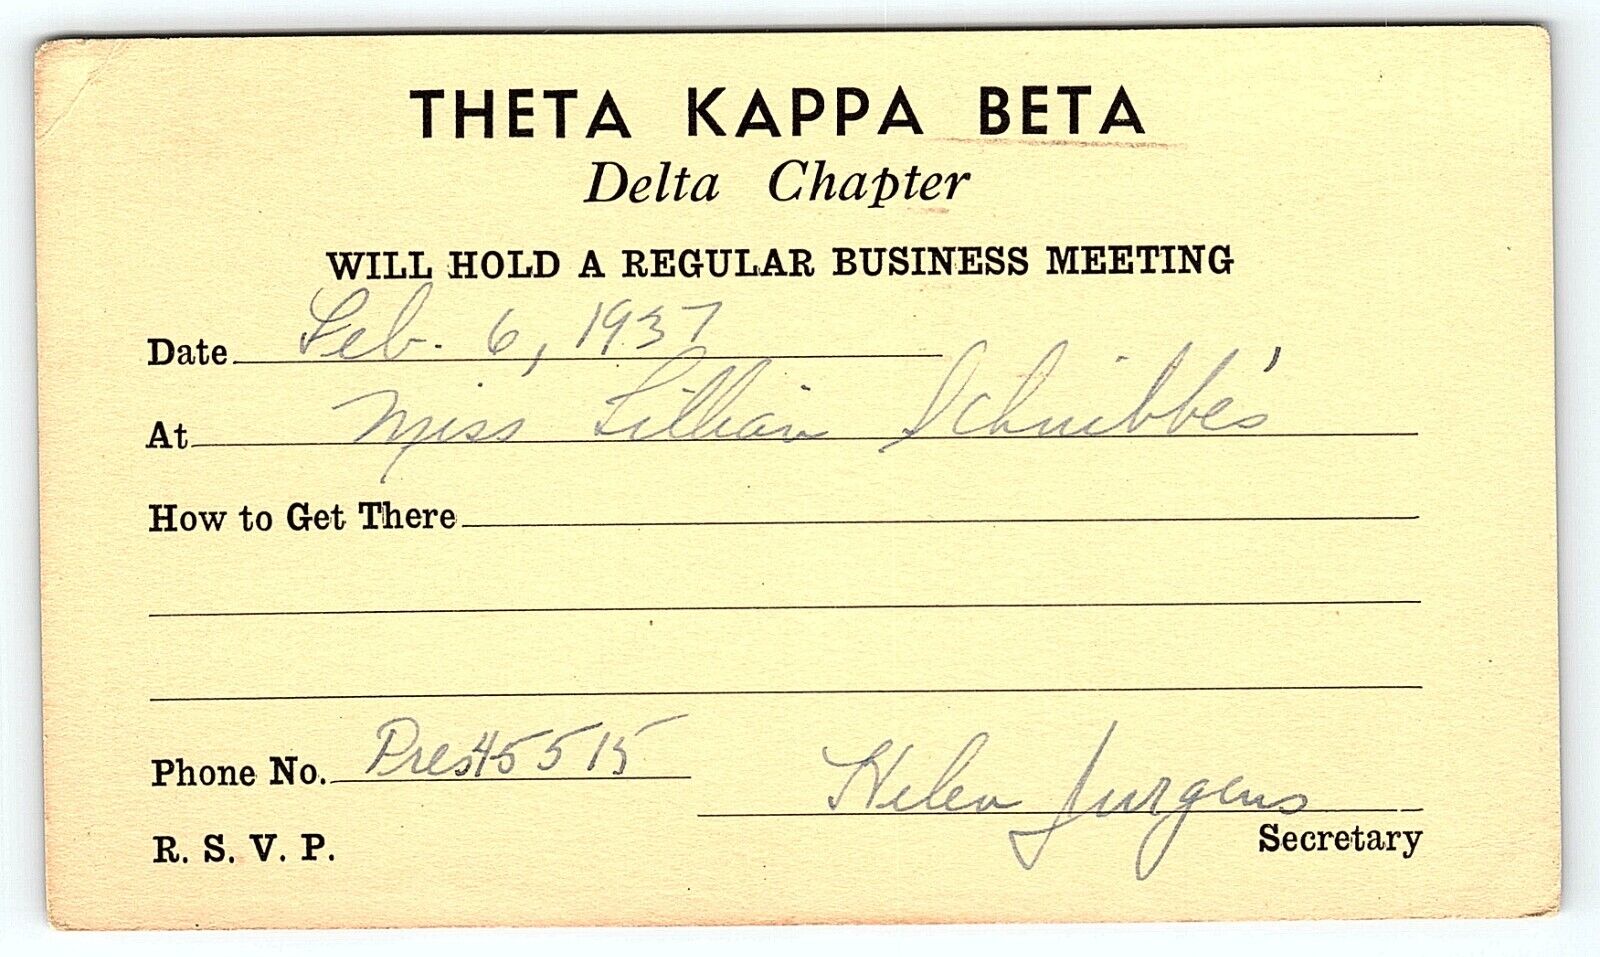 1937 THETA KAPPA BETA DELTA CHAPTER BUSINESS MEETING INVITATION POSTCARD P3457